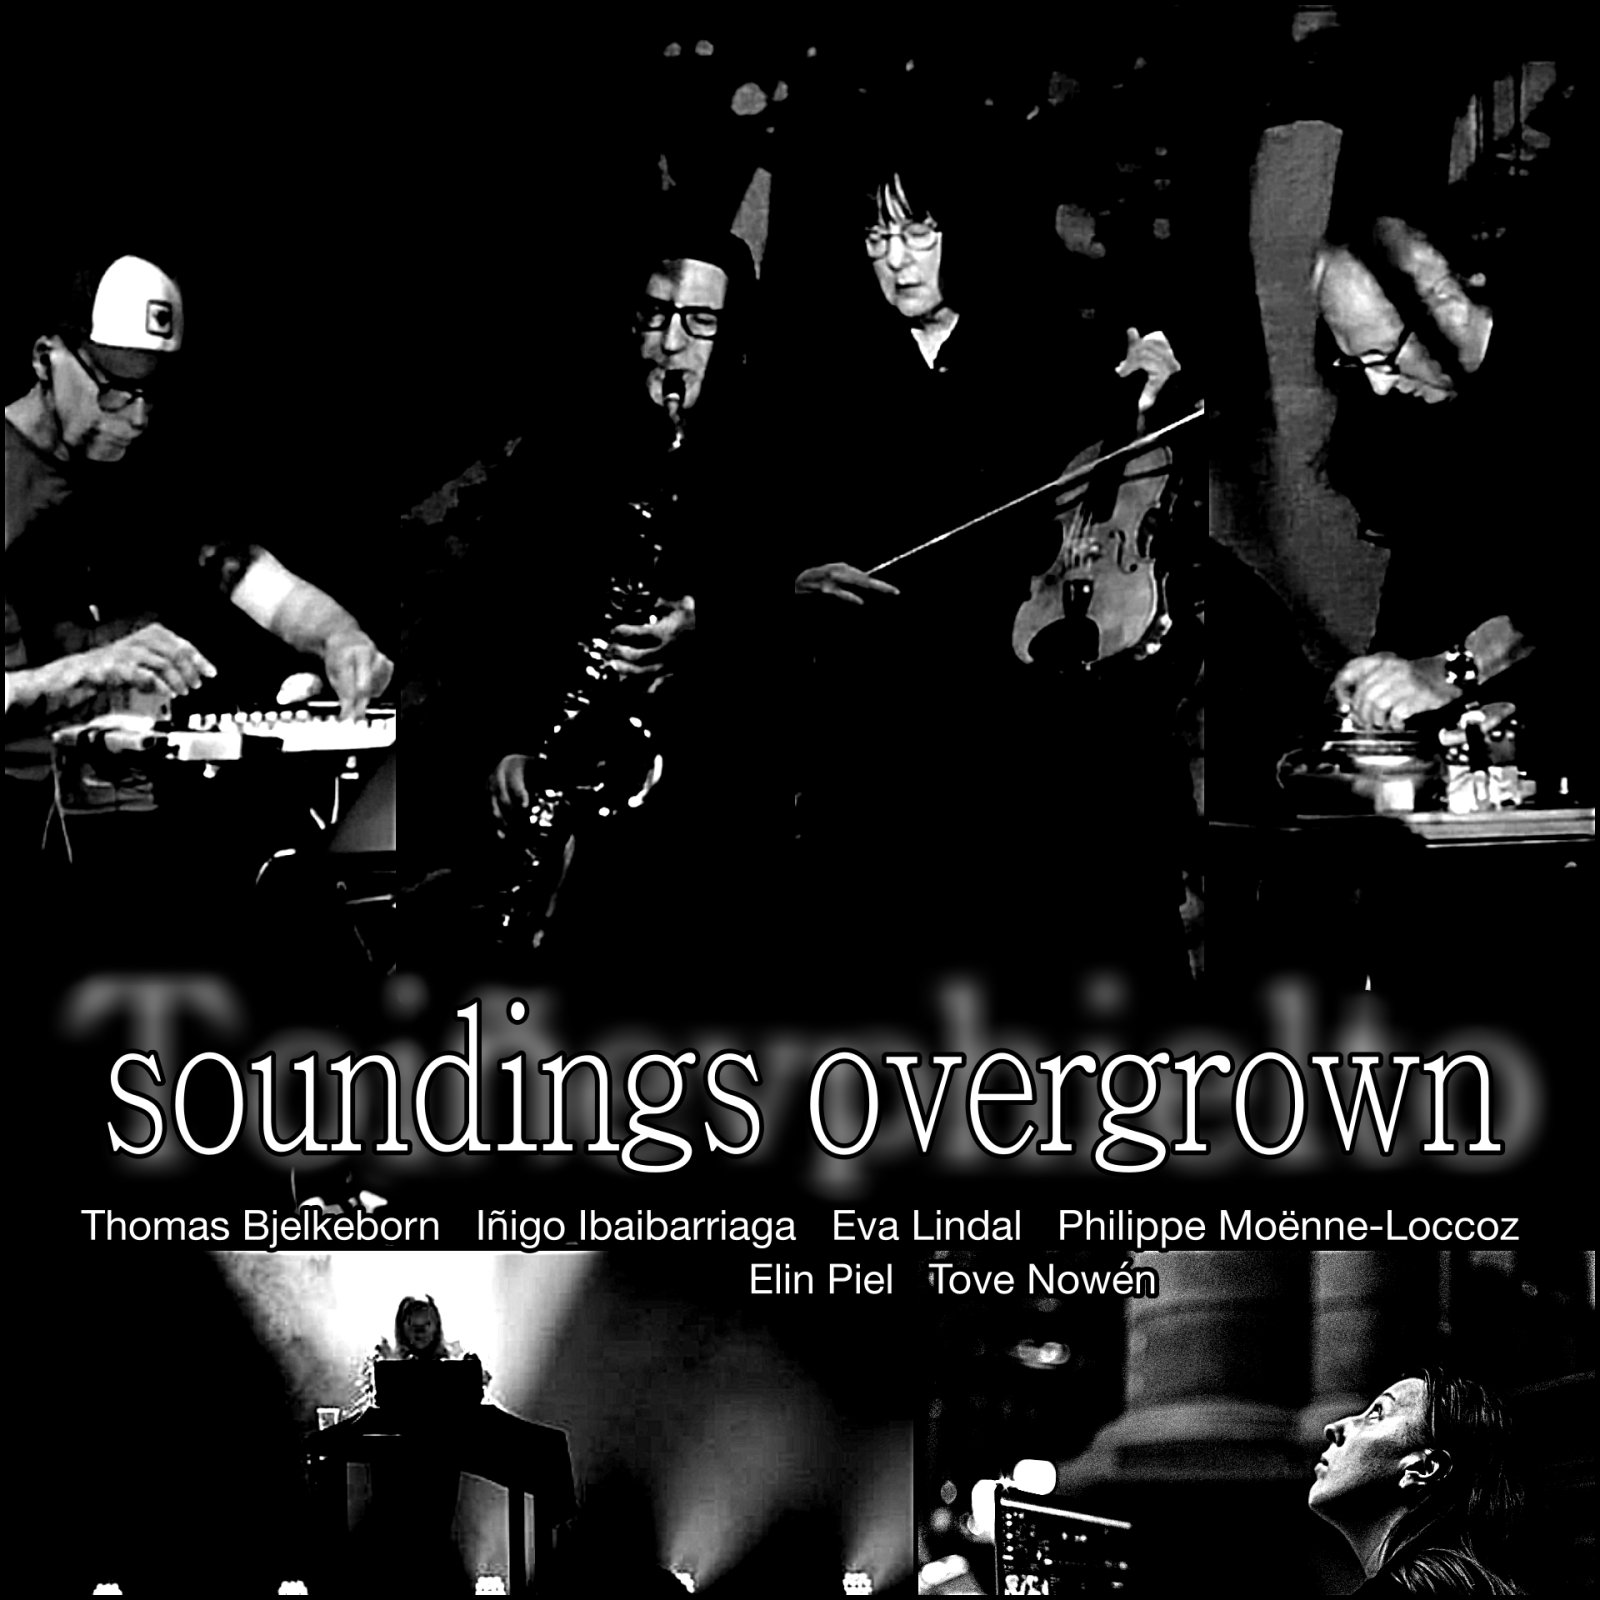 soundings overgrown